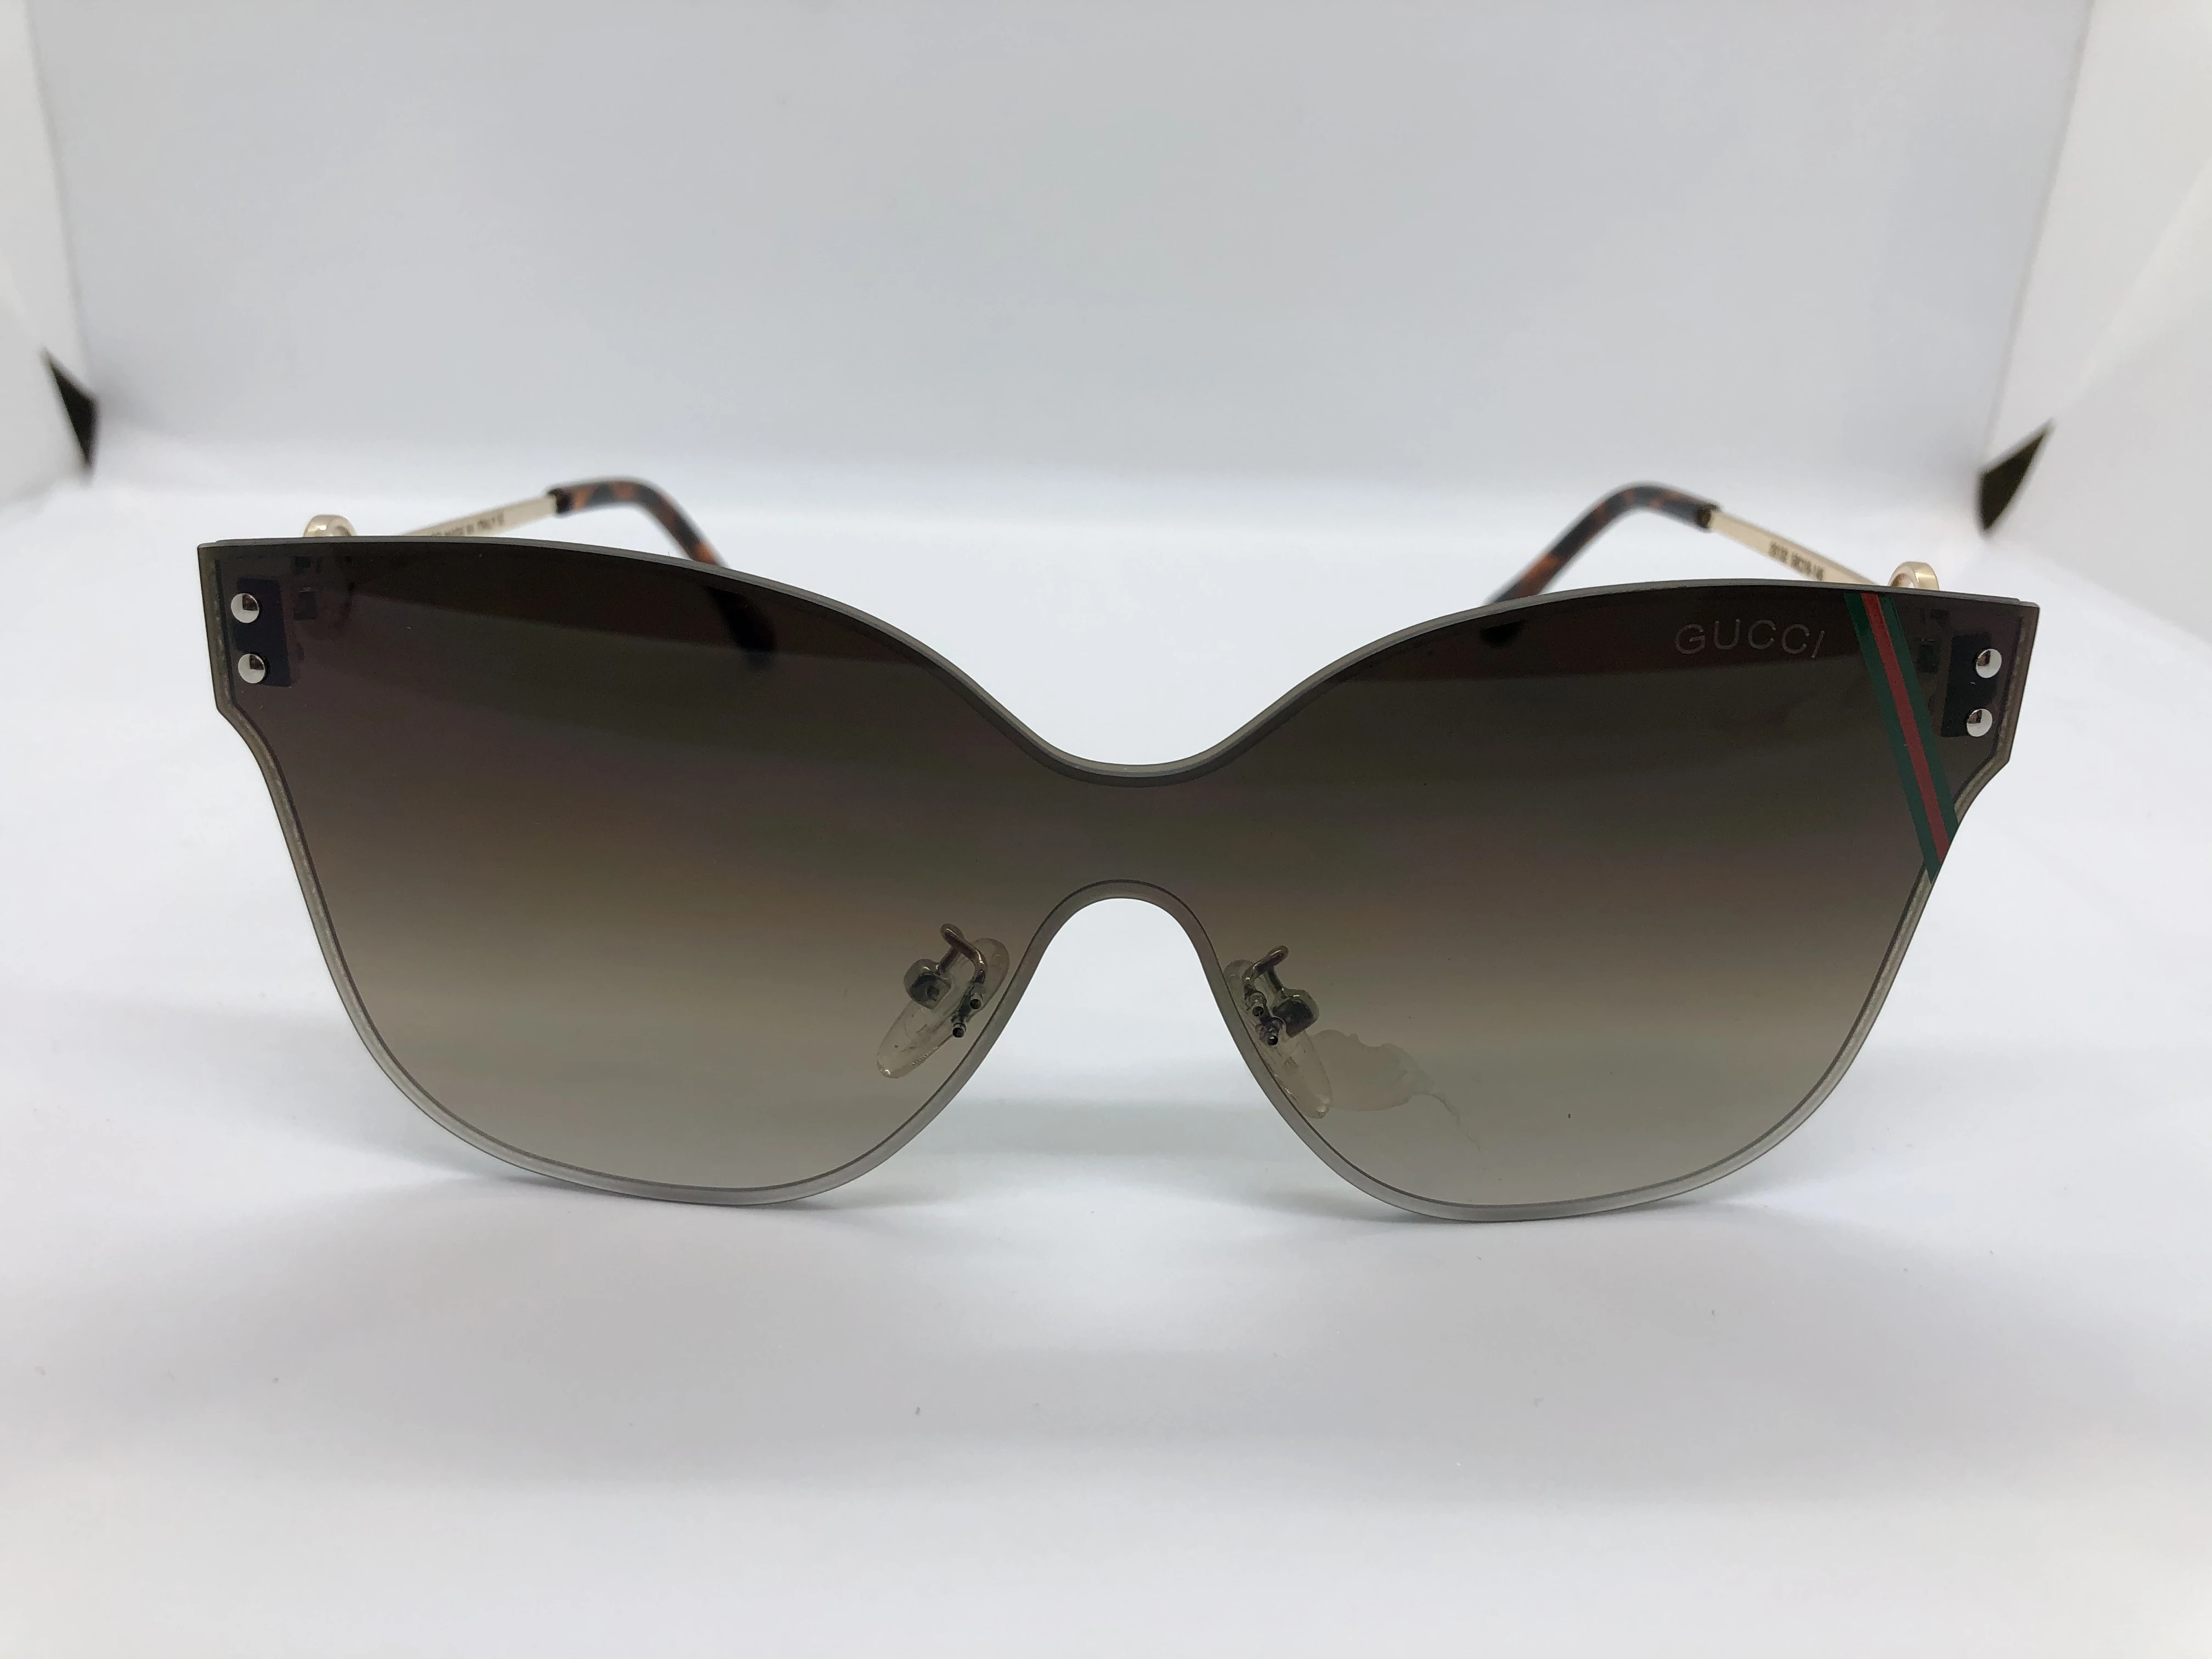 Gucci sunglasses - without frame - dark brown gradient lenses - golden metal arm - gold * black brand logo - for women